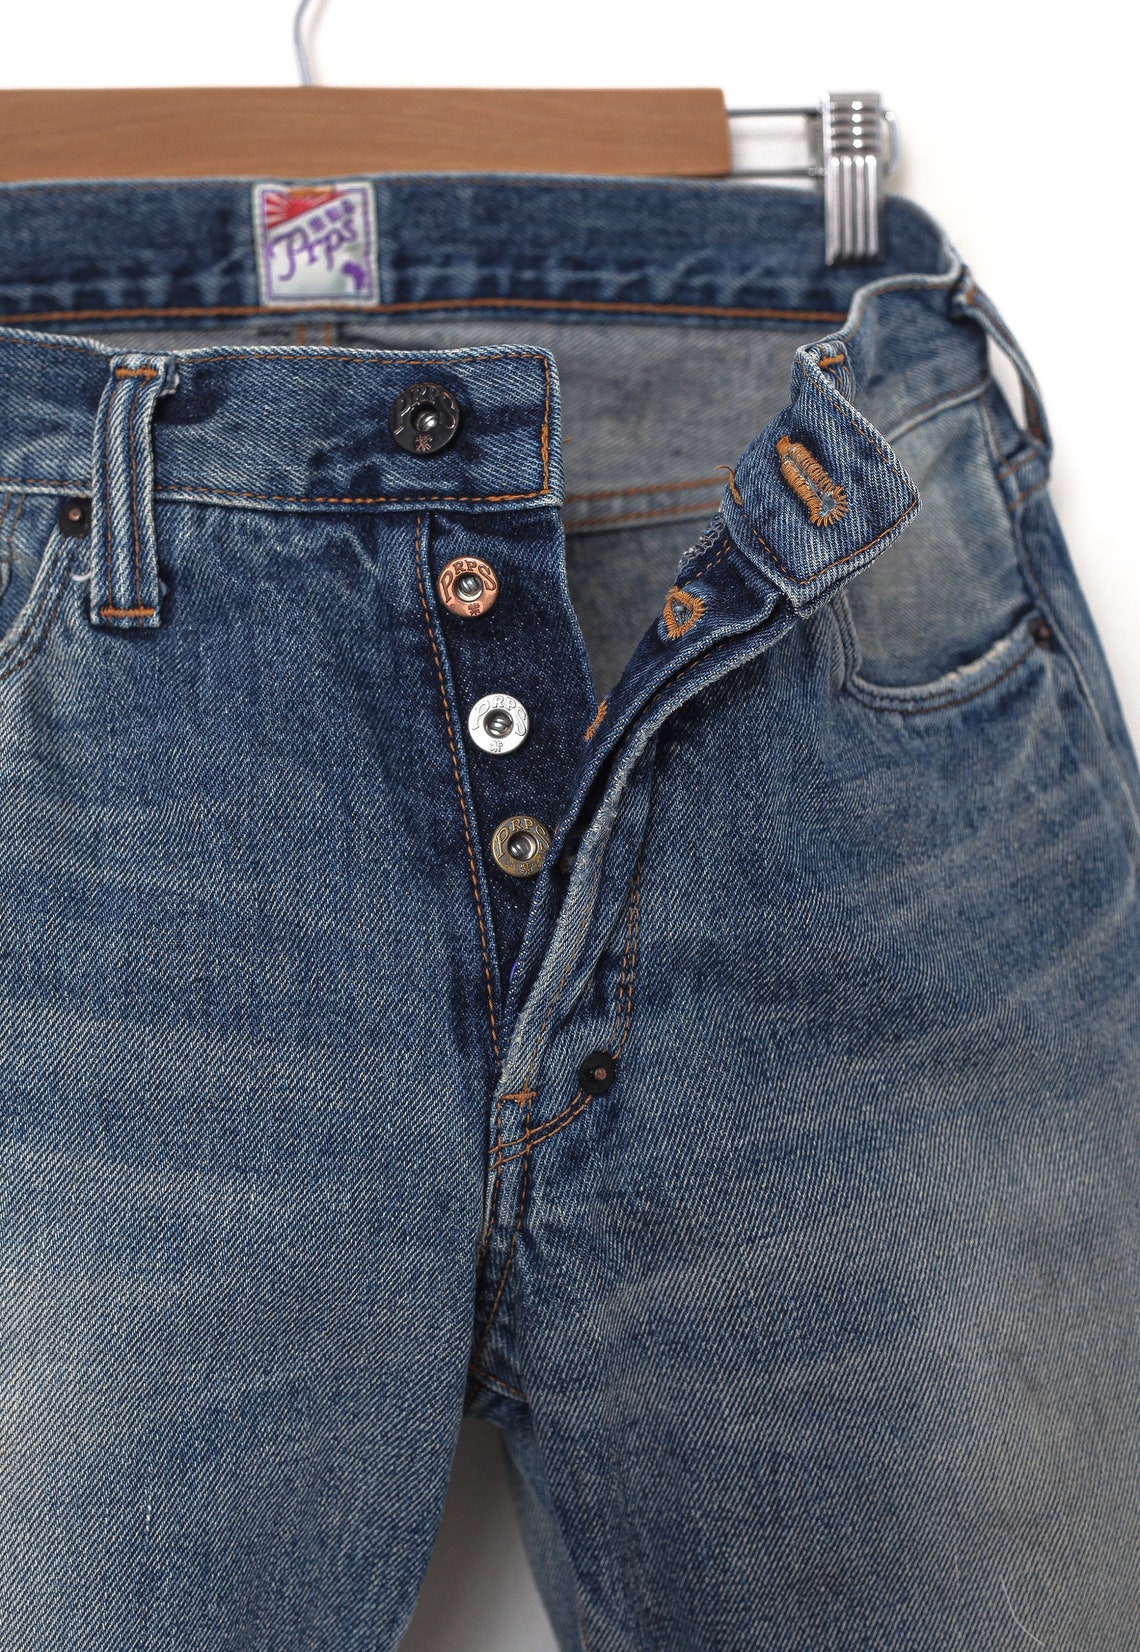 Mens PRPS Jeans Distressed Selvedge Denim Blue Made in Japan | Etsy